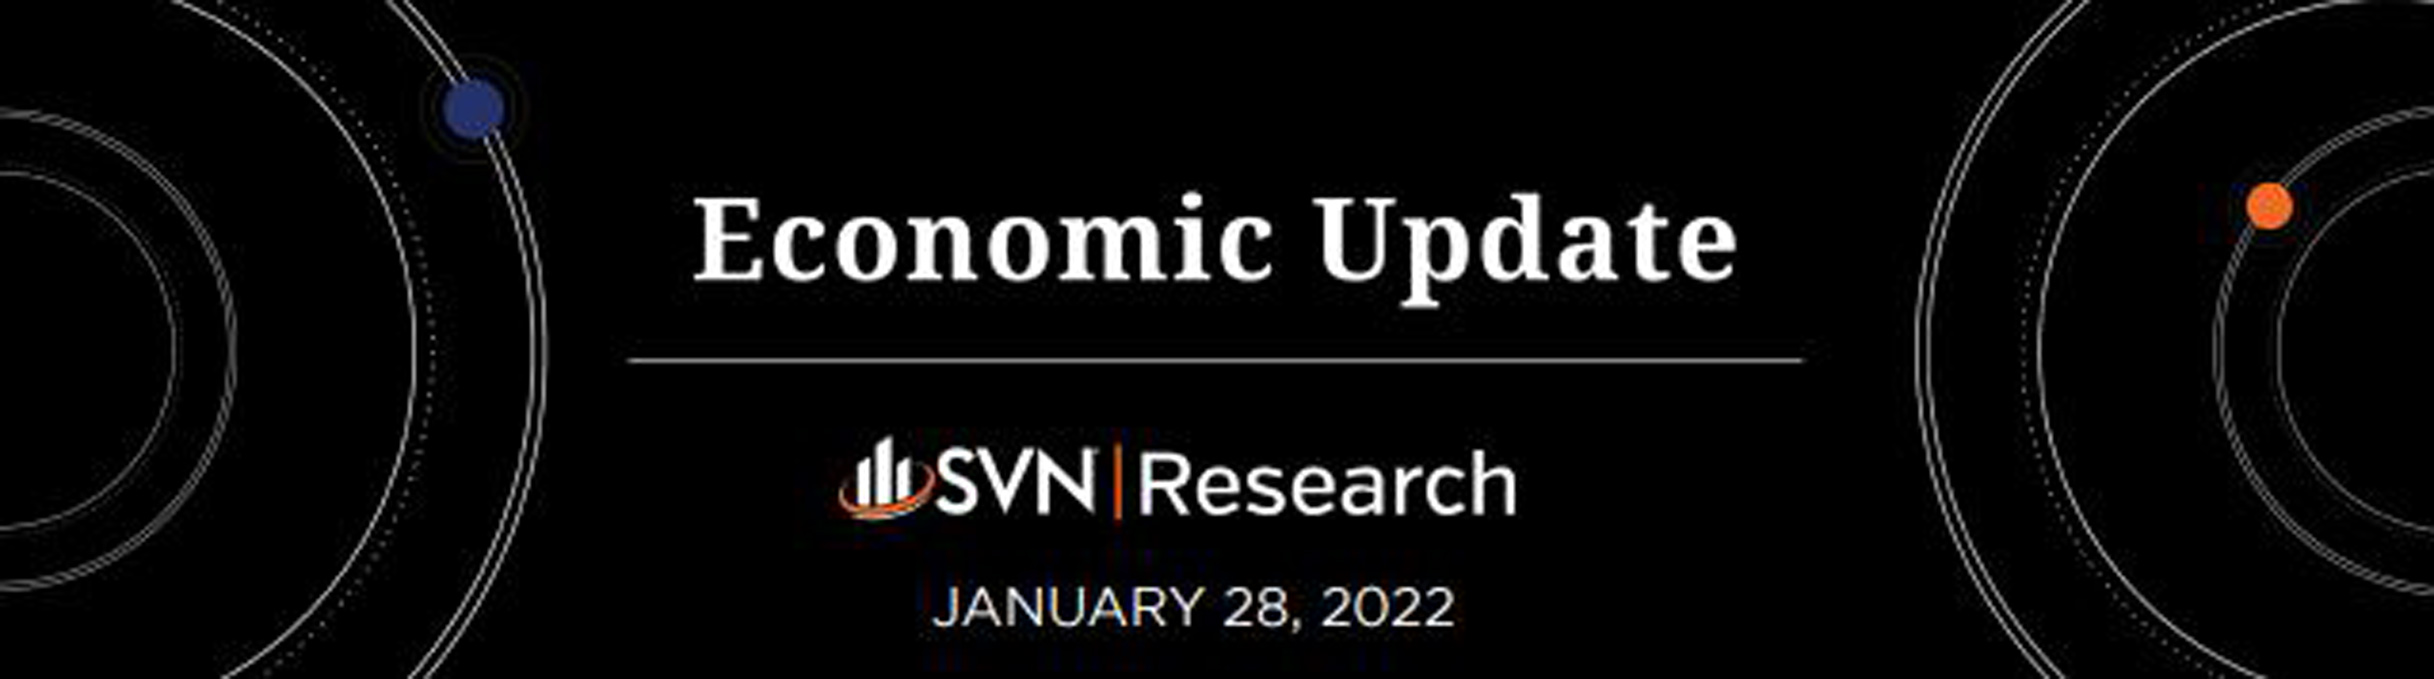 SVN | Research Economic Update 1.28.2022